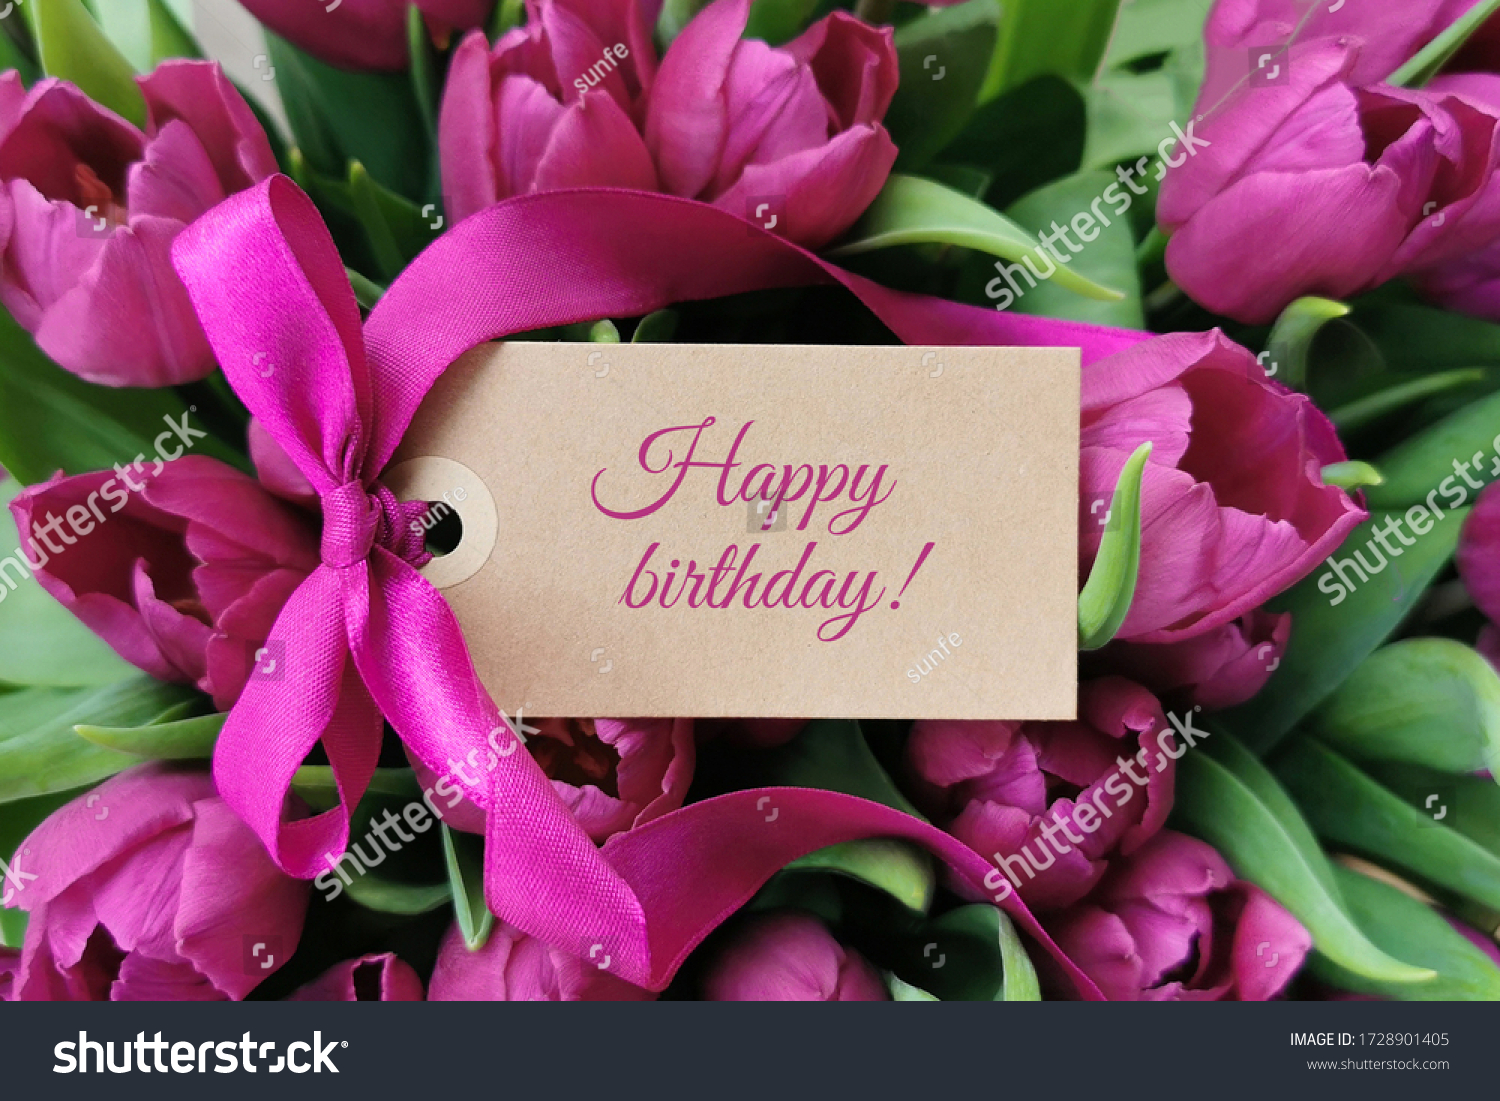 19,750 Birthday flower april Images, Stock Photos & Vectors | Shutterstock